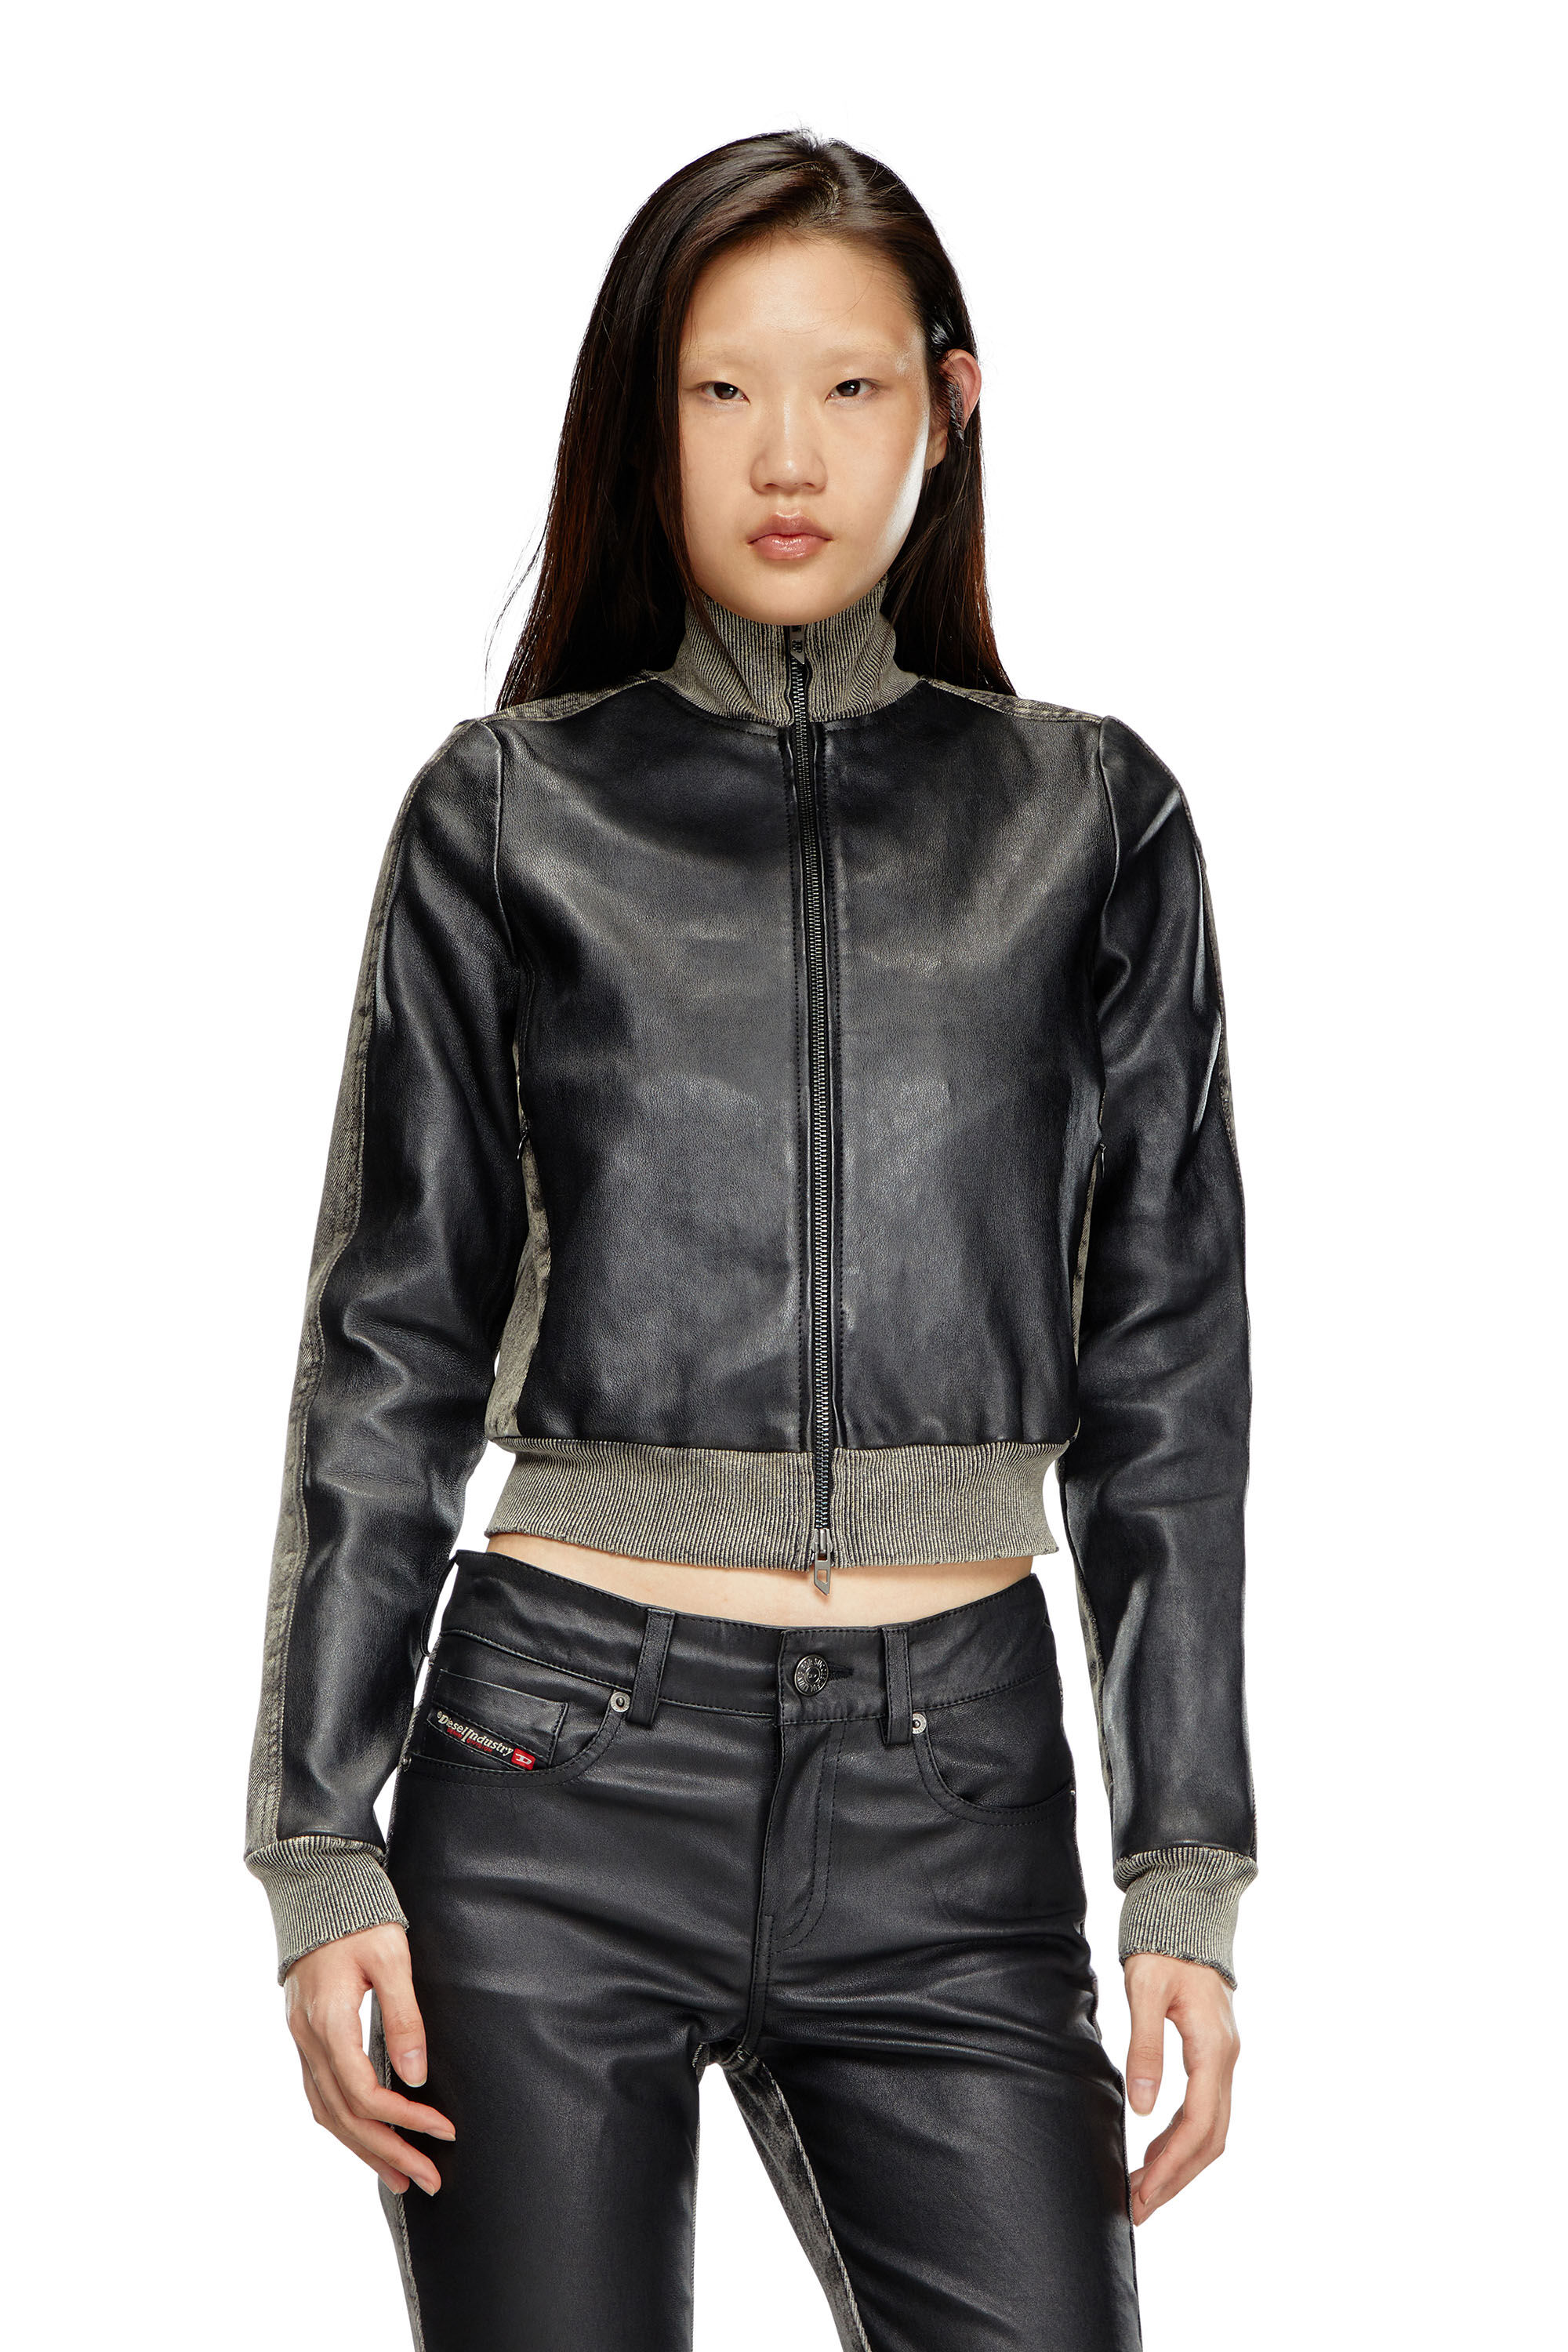 Diesel - L-EADER, Female Hybrid jacket in leather and denim in ブラック - Image 3